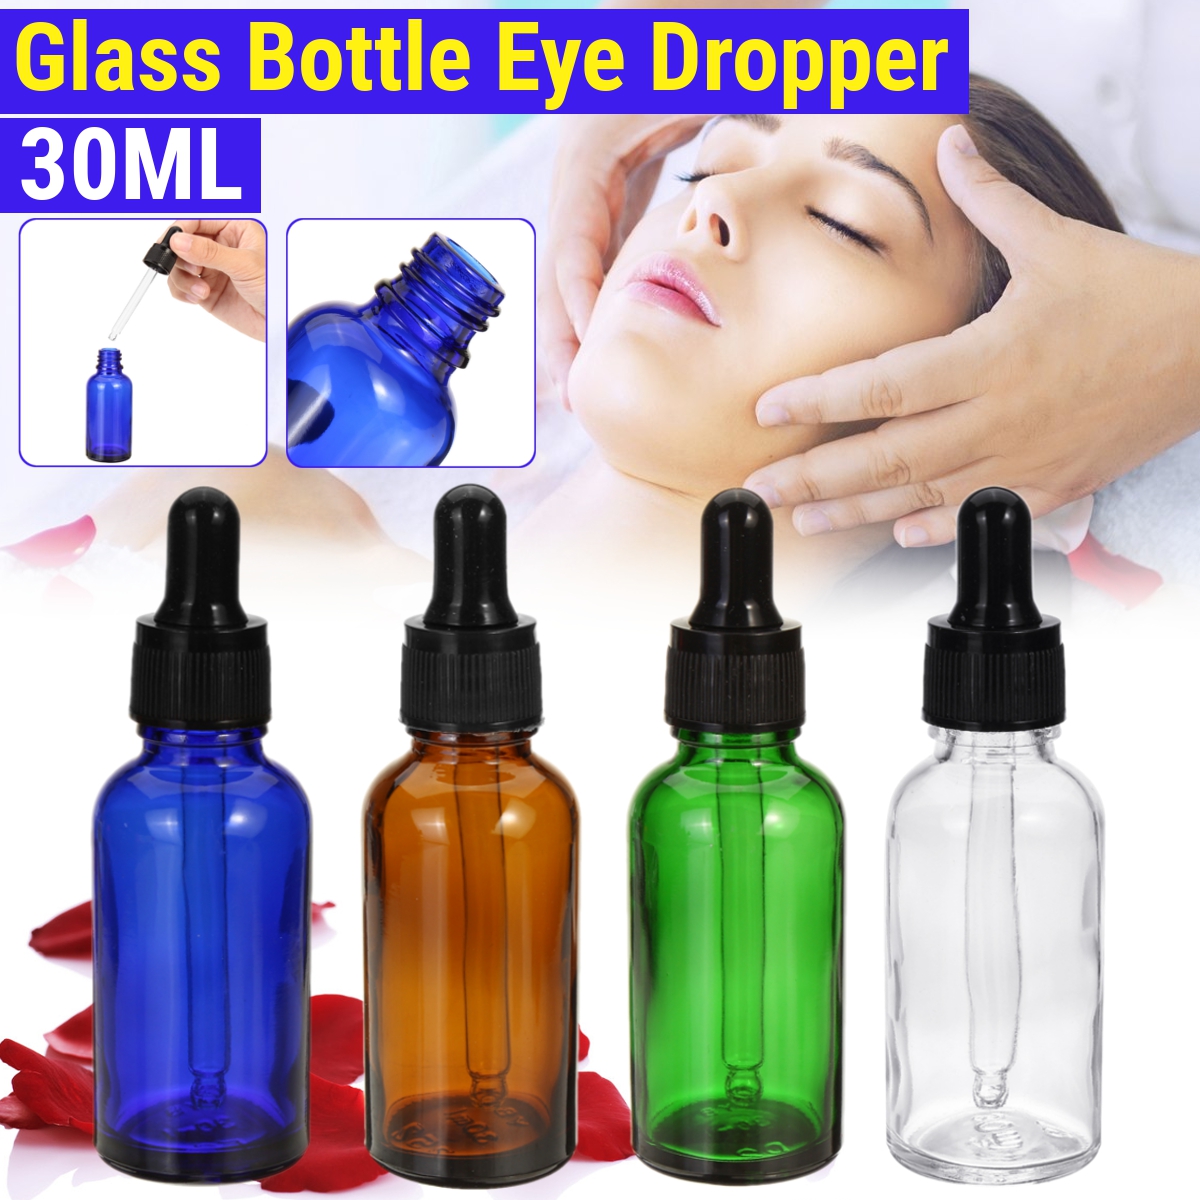 30ml-Glass-Bottle-Eye-Dropper-Essential-Oils-Container-Sprayer-Essential-Oil-Spraying-Bottle-1690669-1